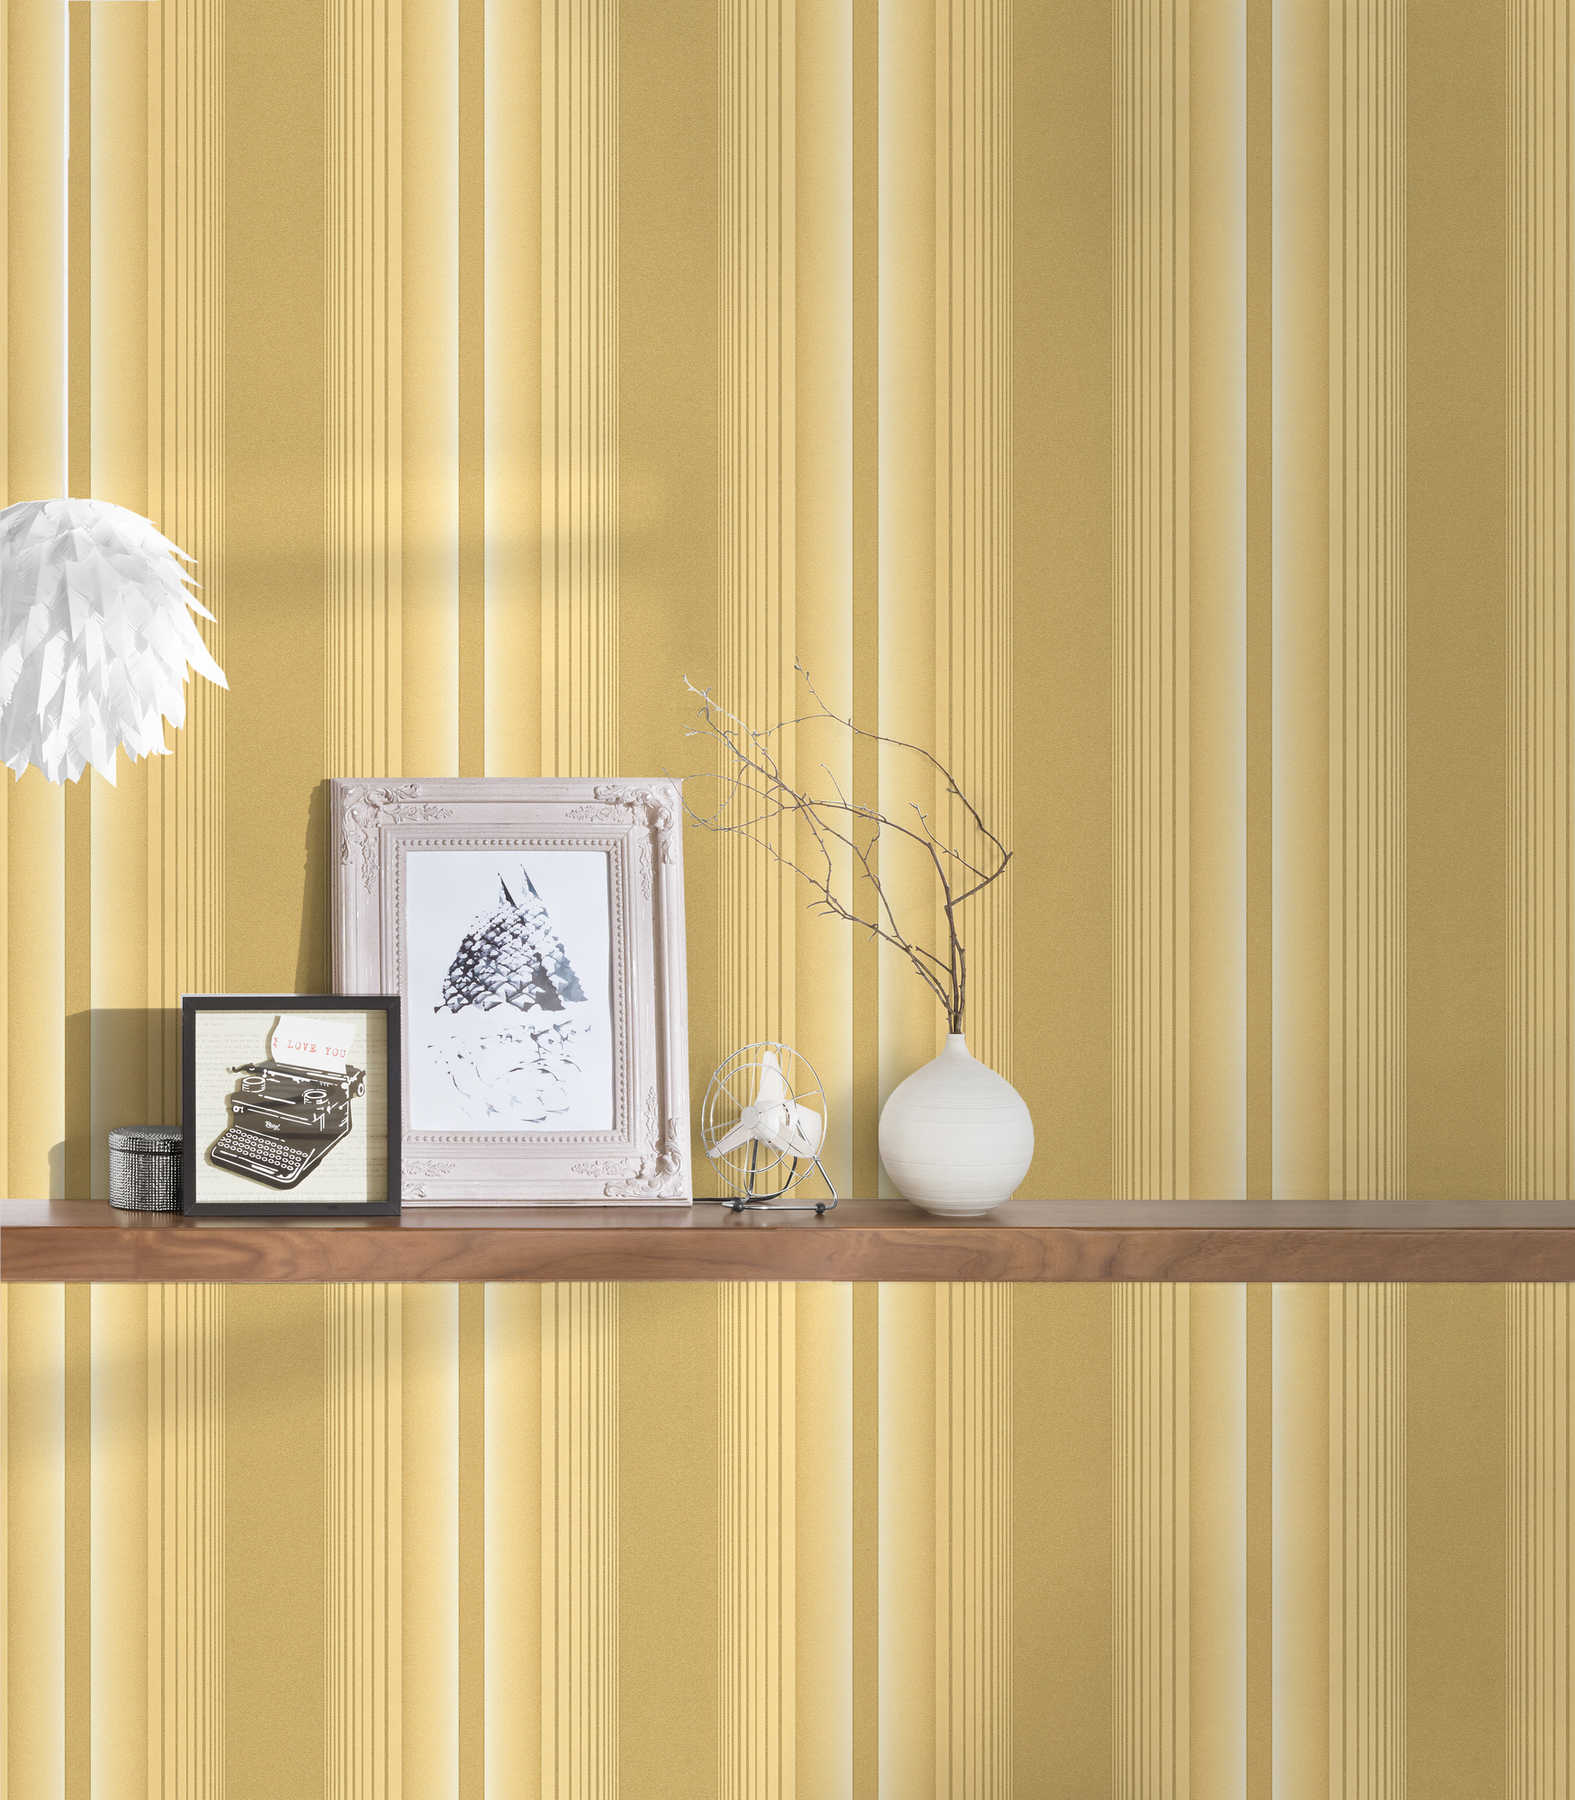             Golden wallpaper with stripe pattern, elegant & opulent
        